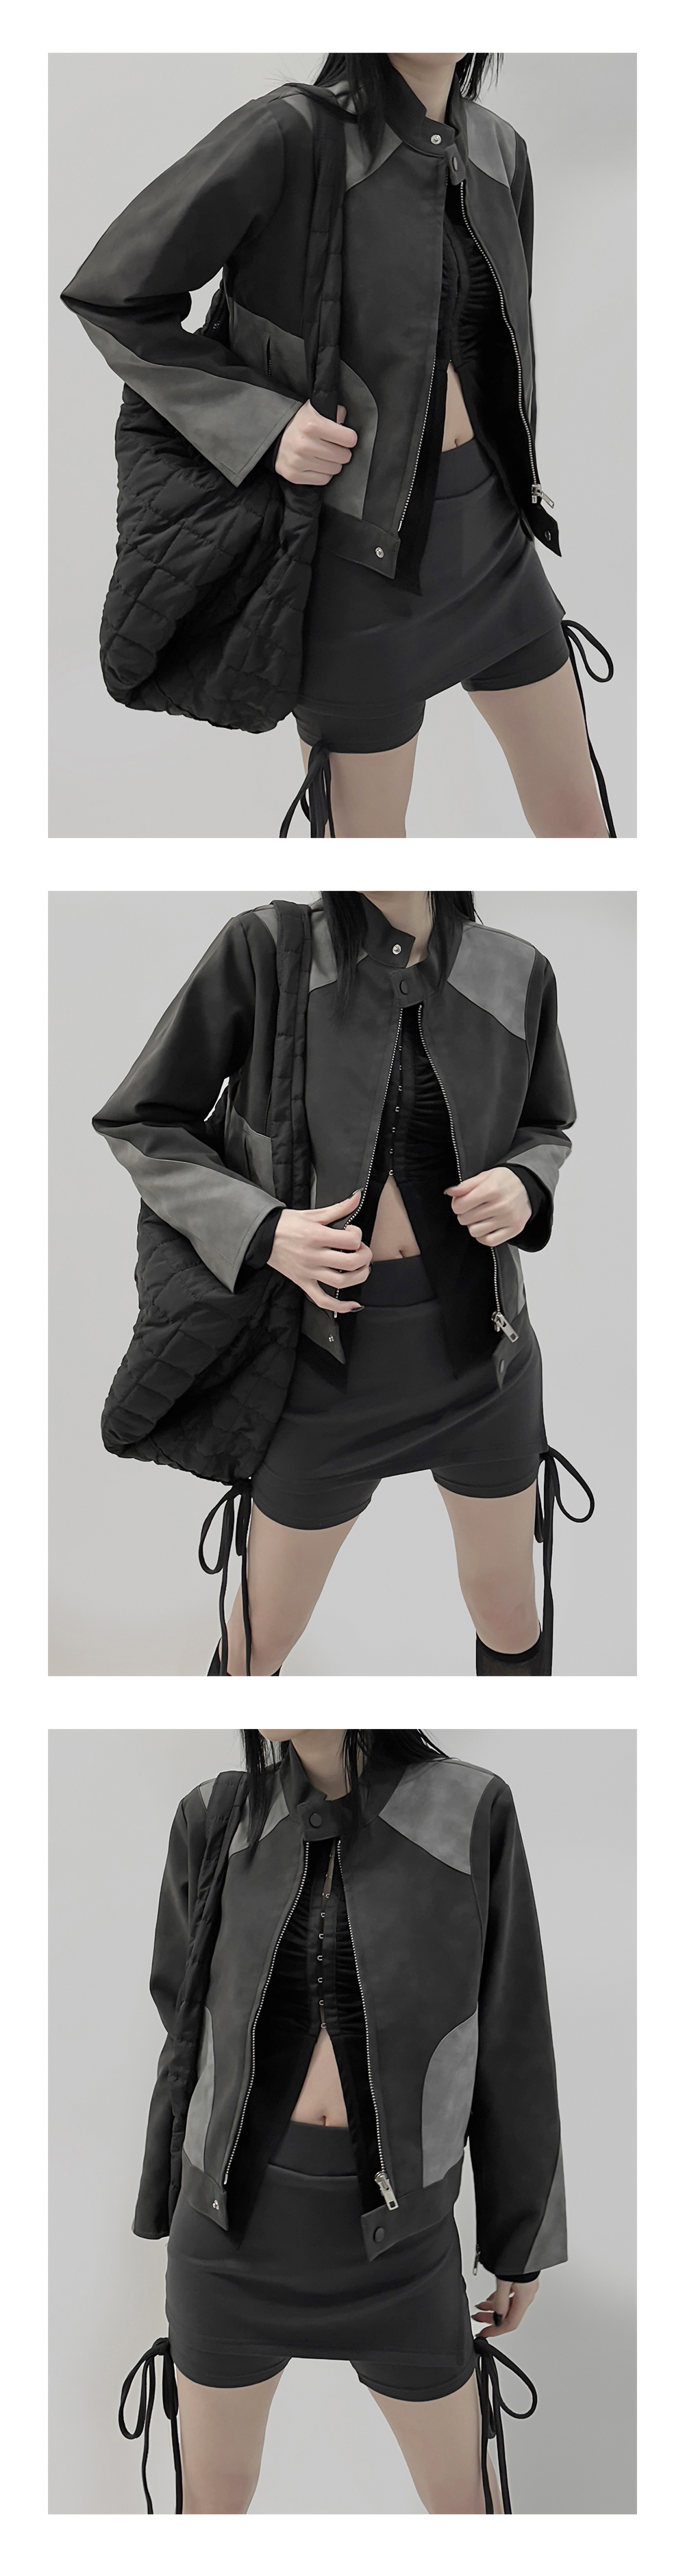 jacket charcoal color image-S1L8